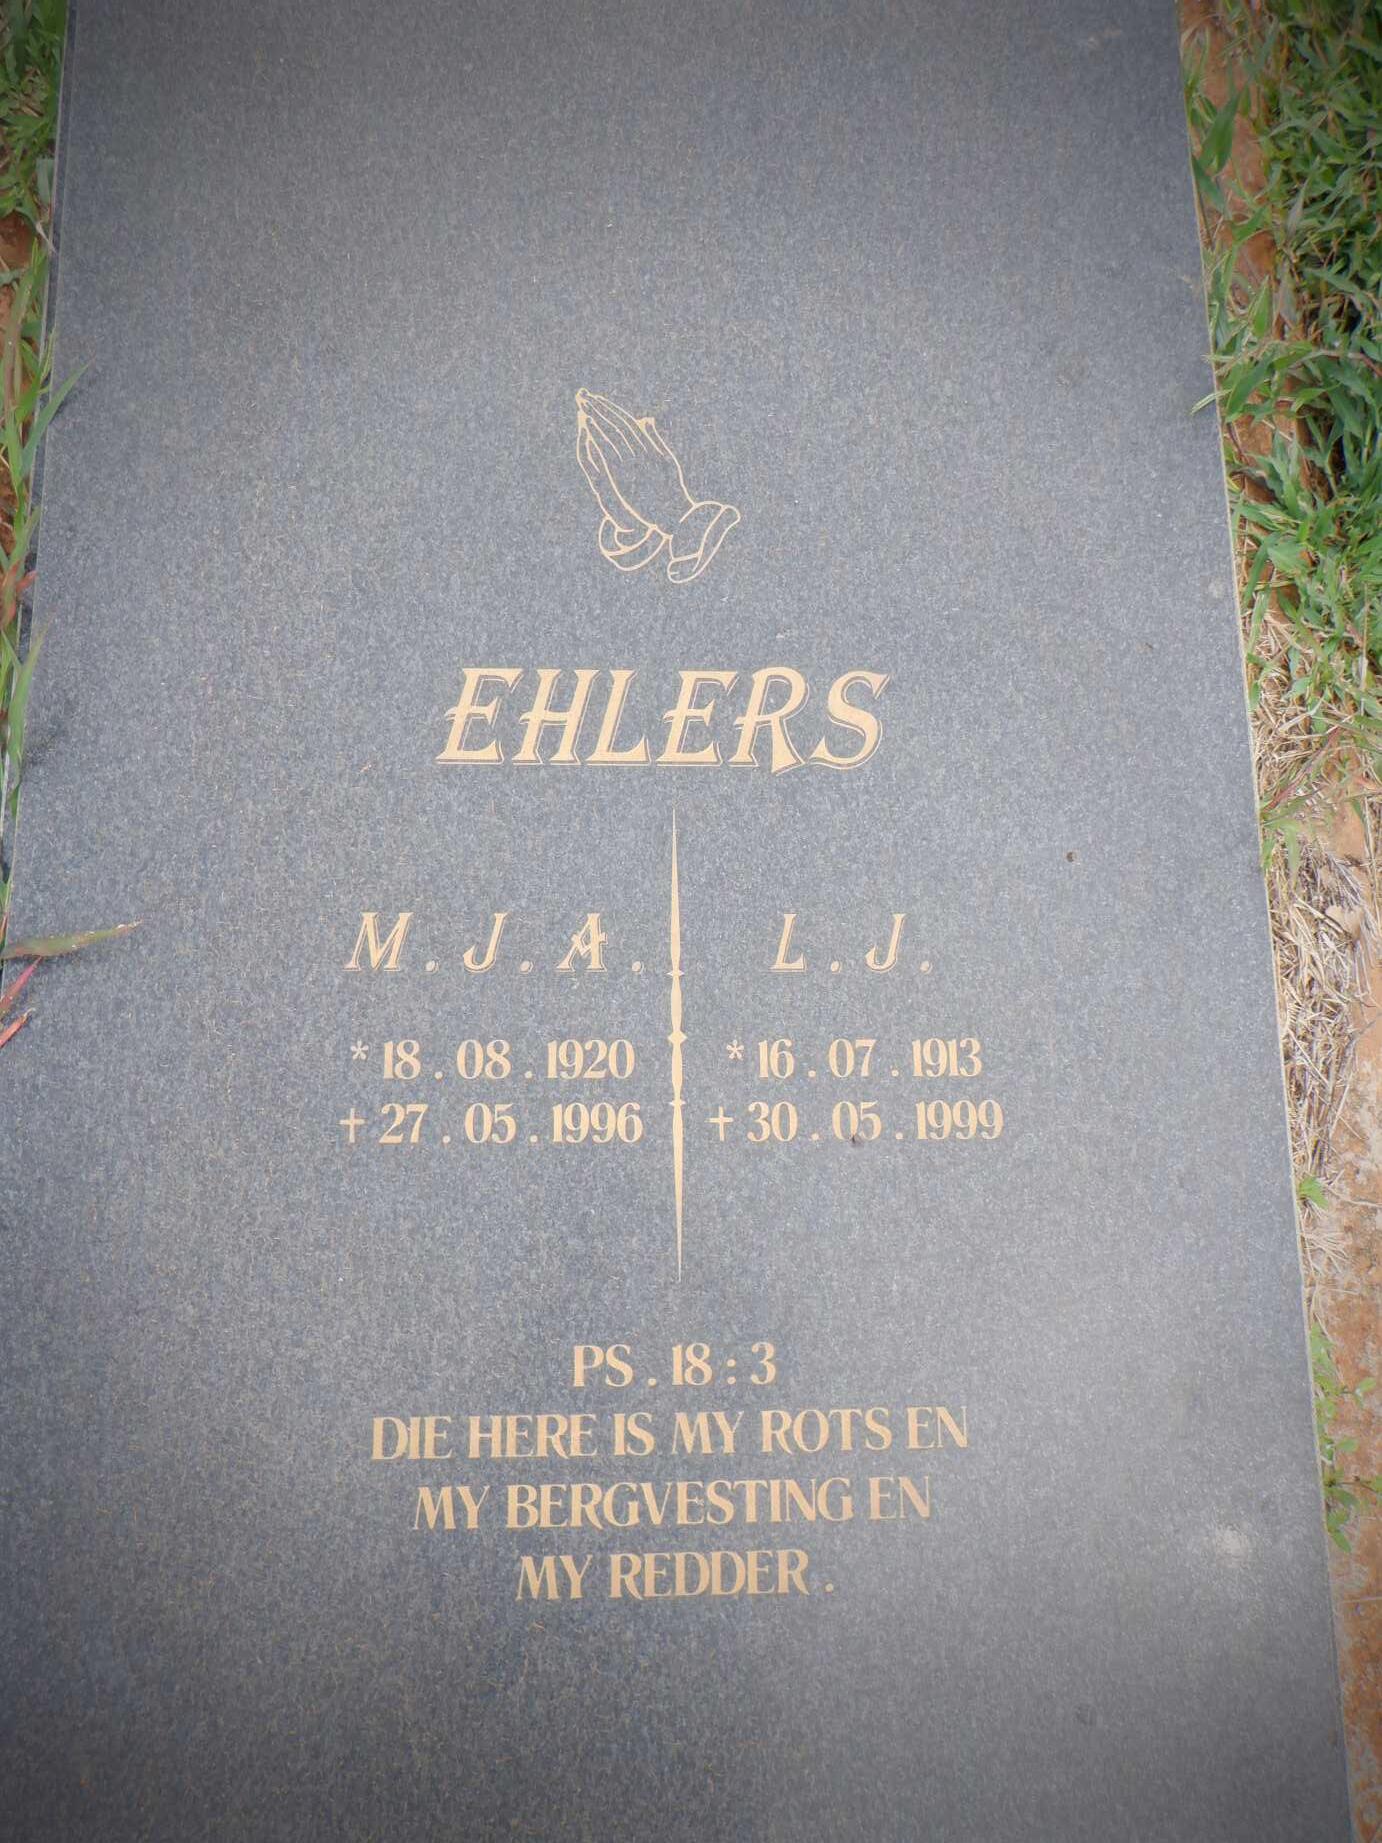 EHLERS M.J.A. 1920-1996 & L.J. 1913-1999